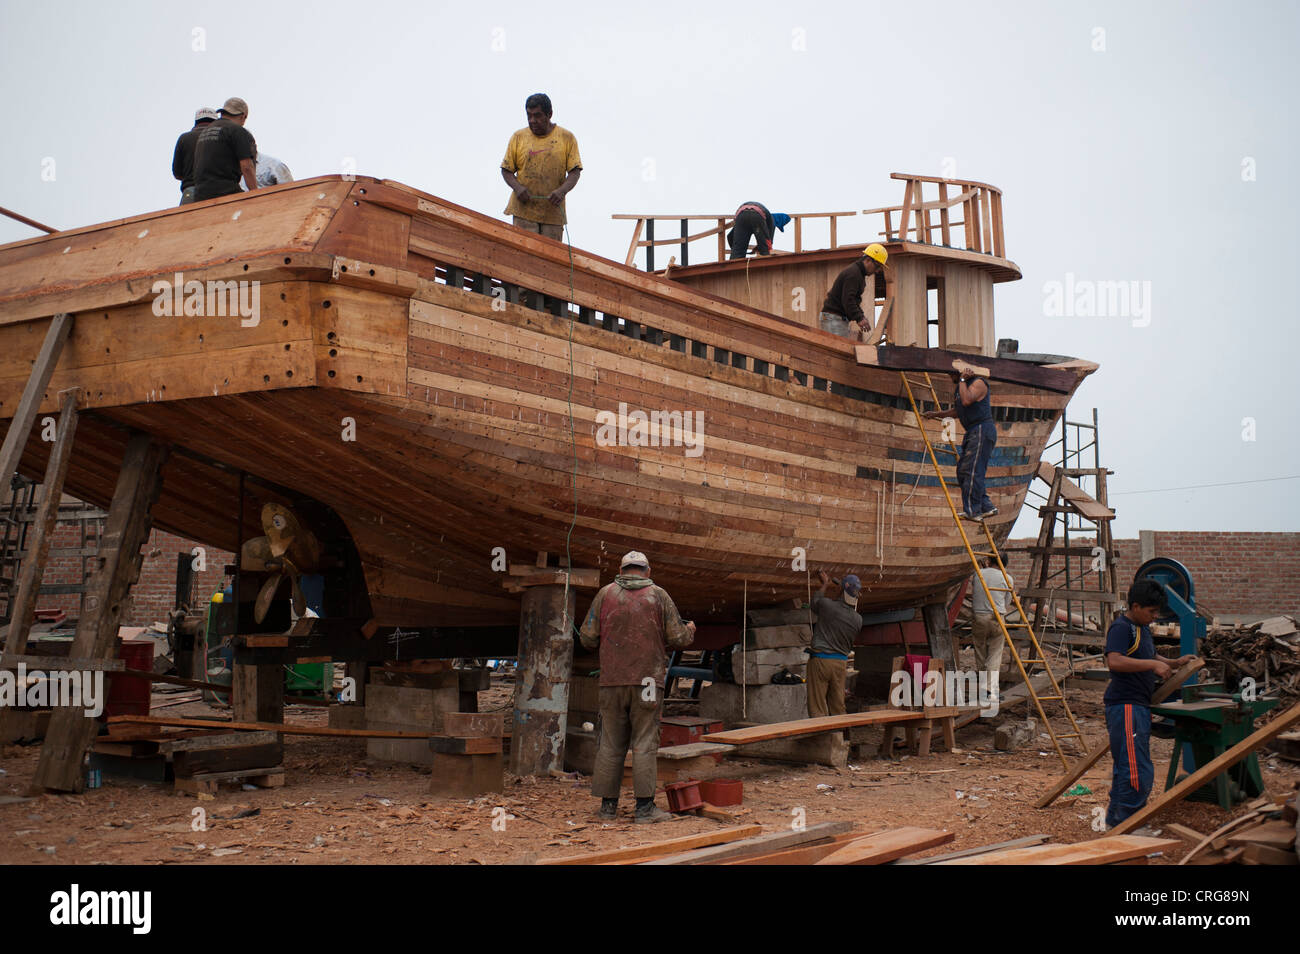 Wood boat building at shipyard in Callao port, Peru Stock Photo